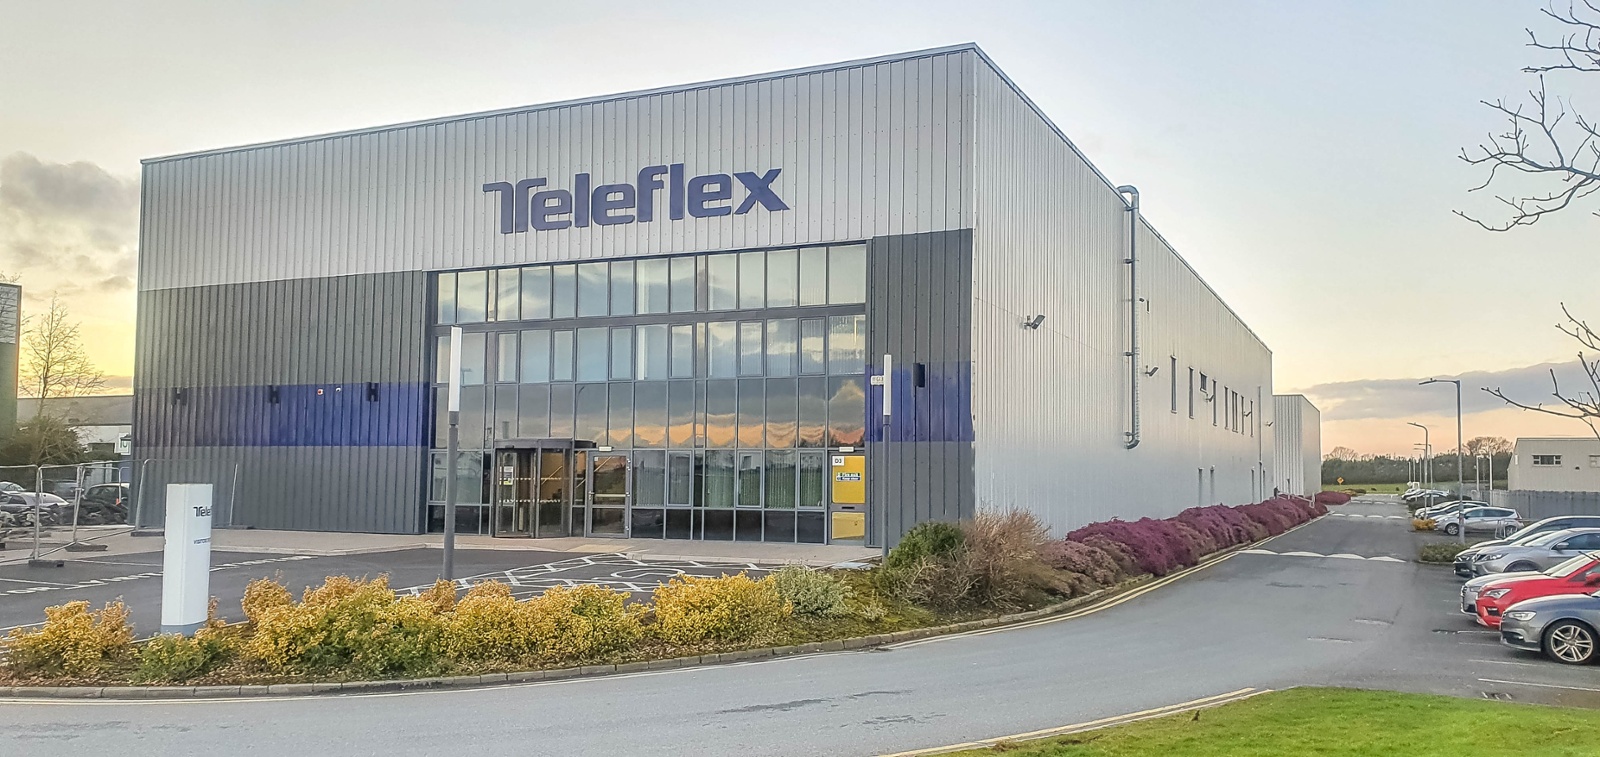 Teleflex Medical Europe Ltd